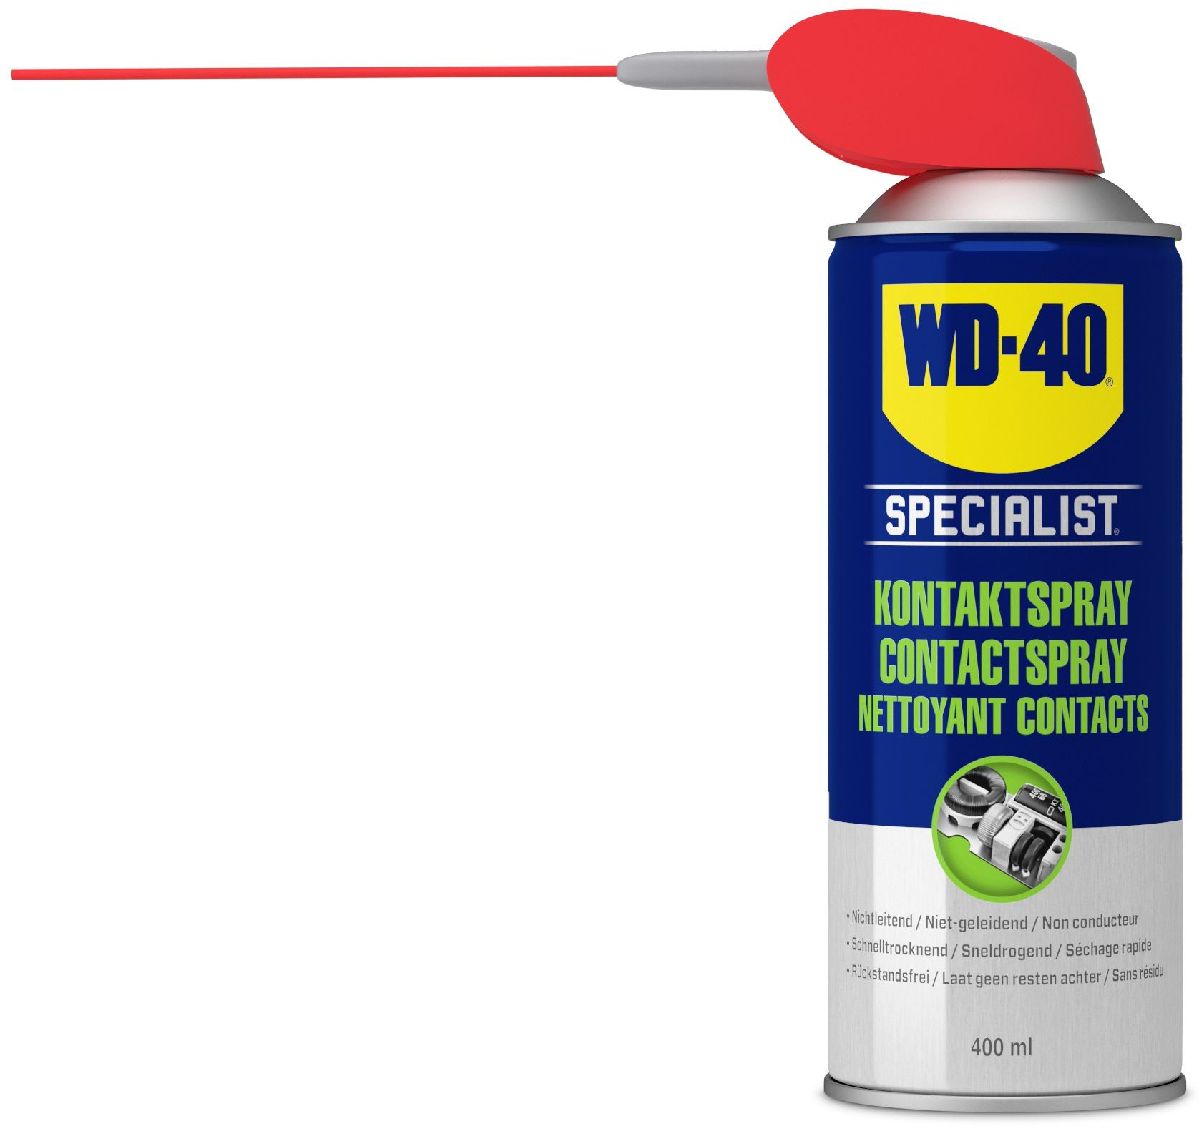 WD-40 Specialist Kontaktspray 400ml mit Smart Straw